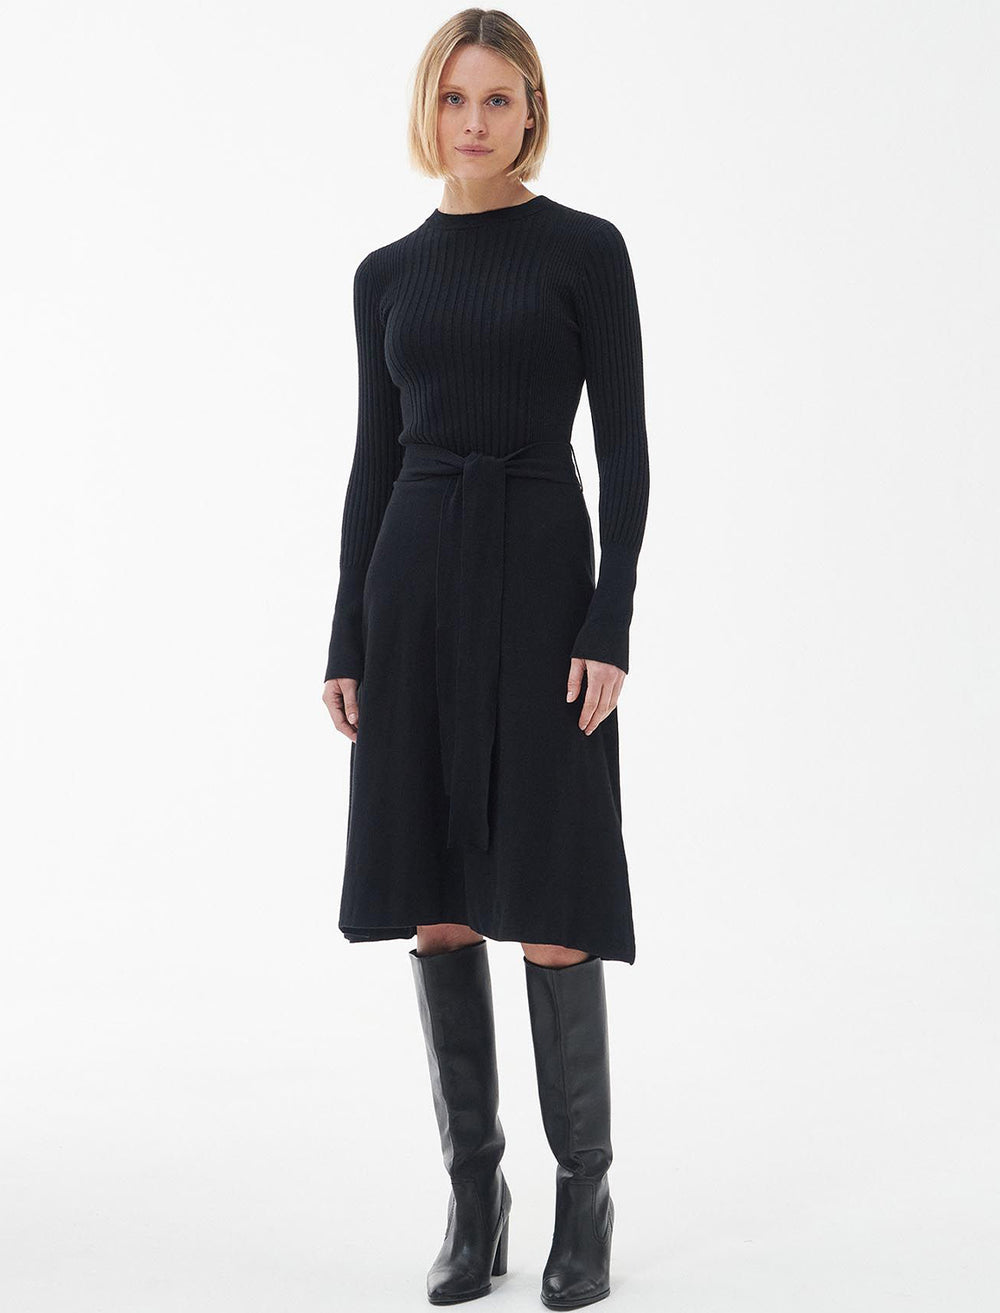 Model wearing Barbour's amal midi knit dress in black.